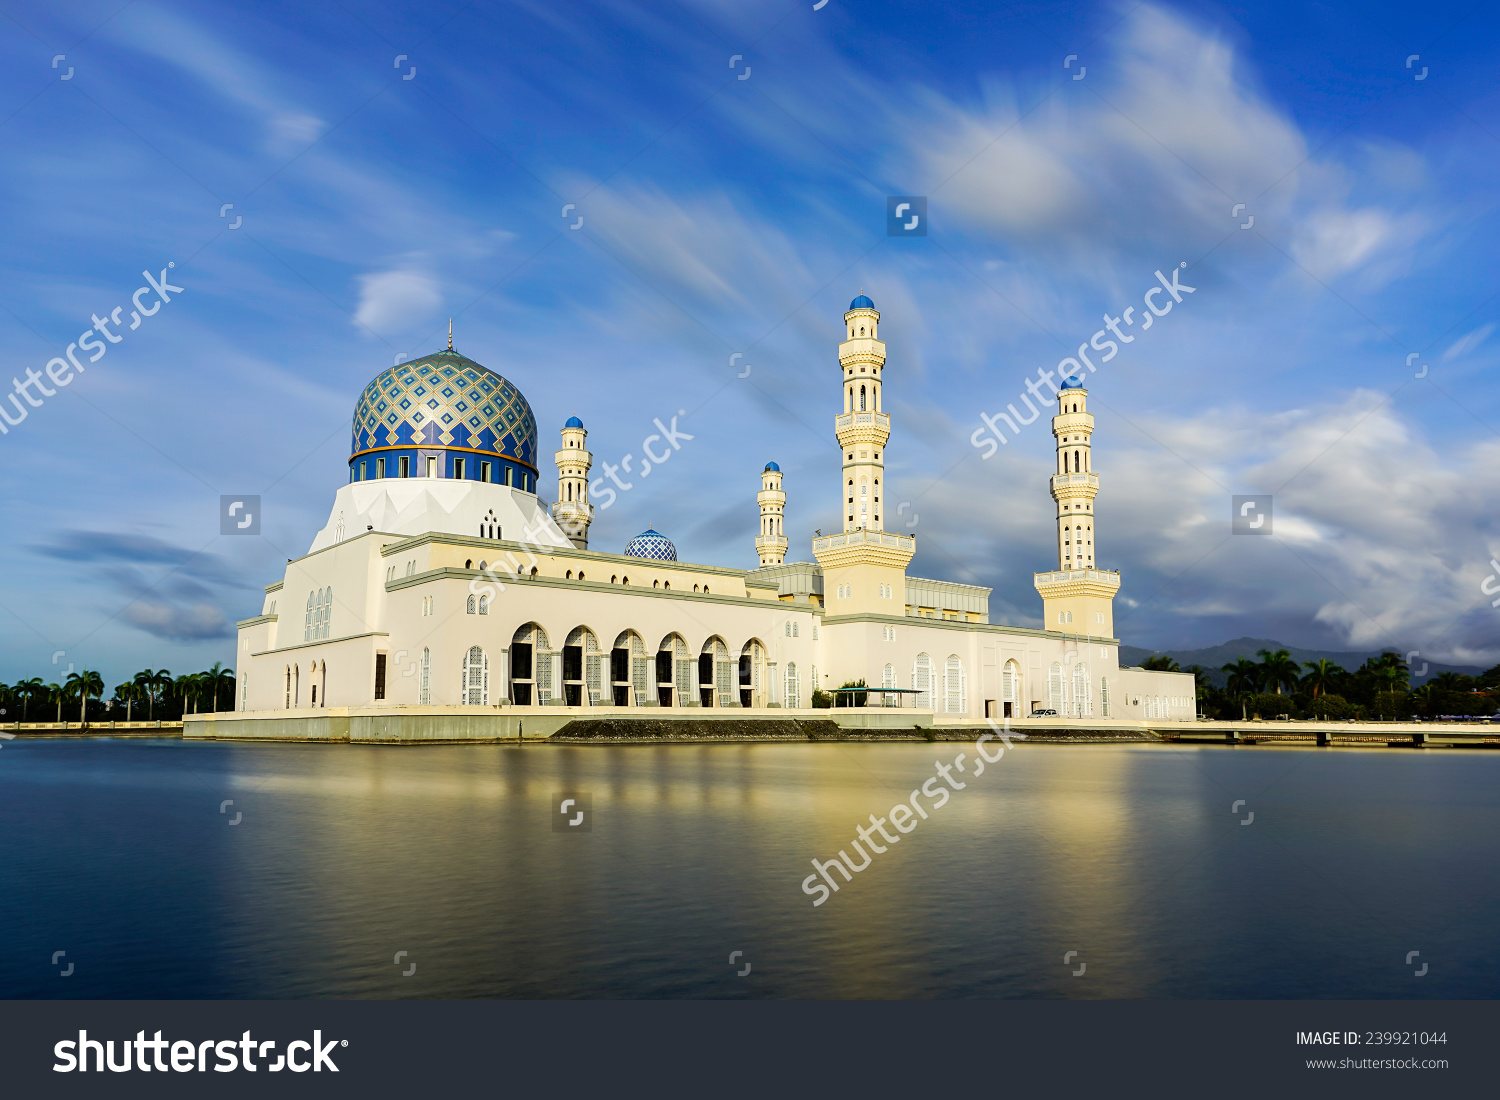 Nice wallpapers Kota Kinabalu City Mosque 1500x1100px